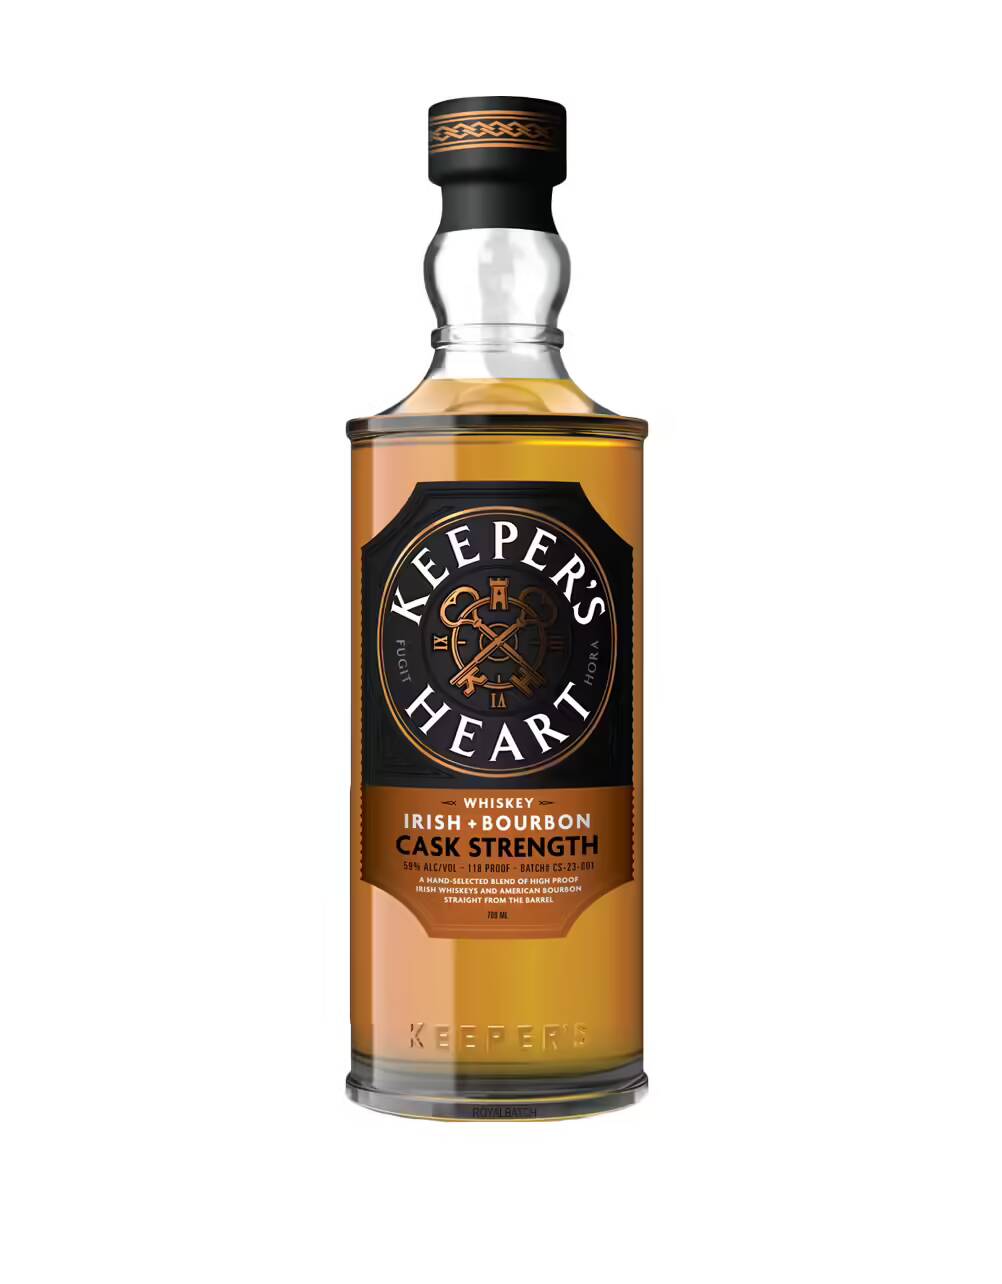 Keepers Heart Irish + Bourbon Cask Strength Whiskey